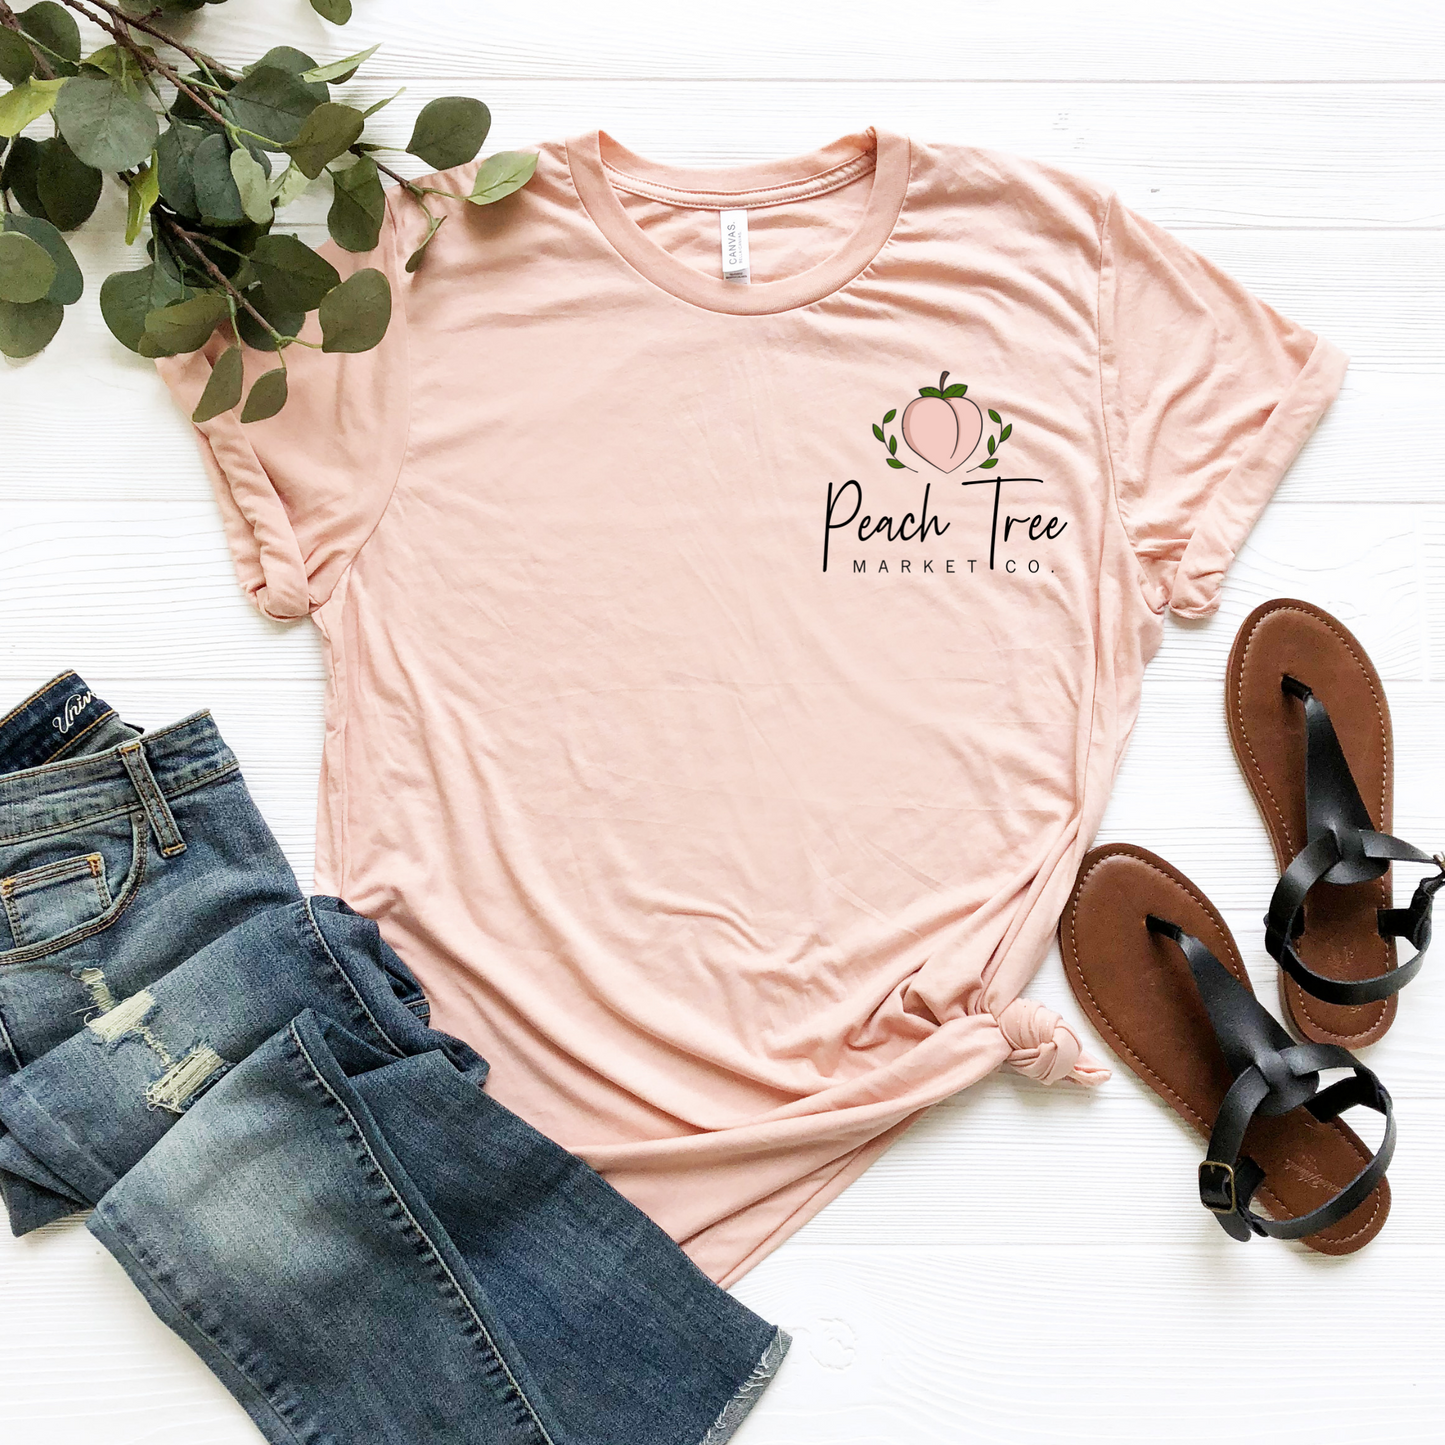 Peach Tree Market Co Merch Shirts